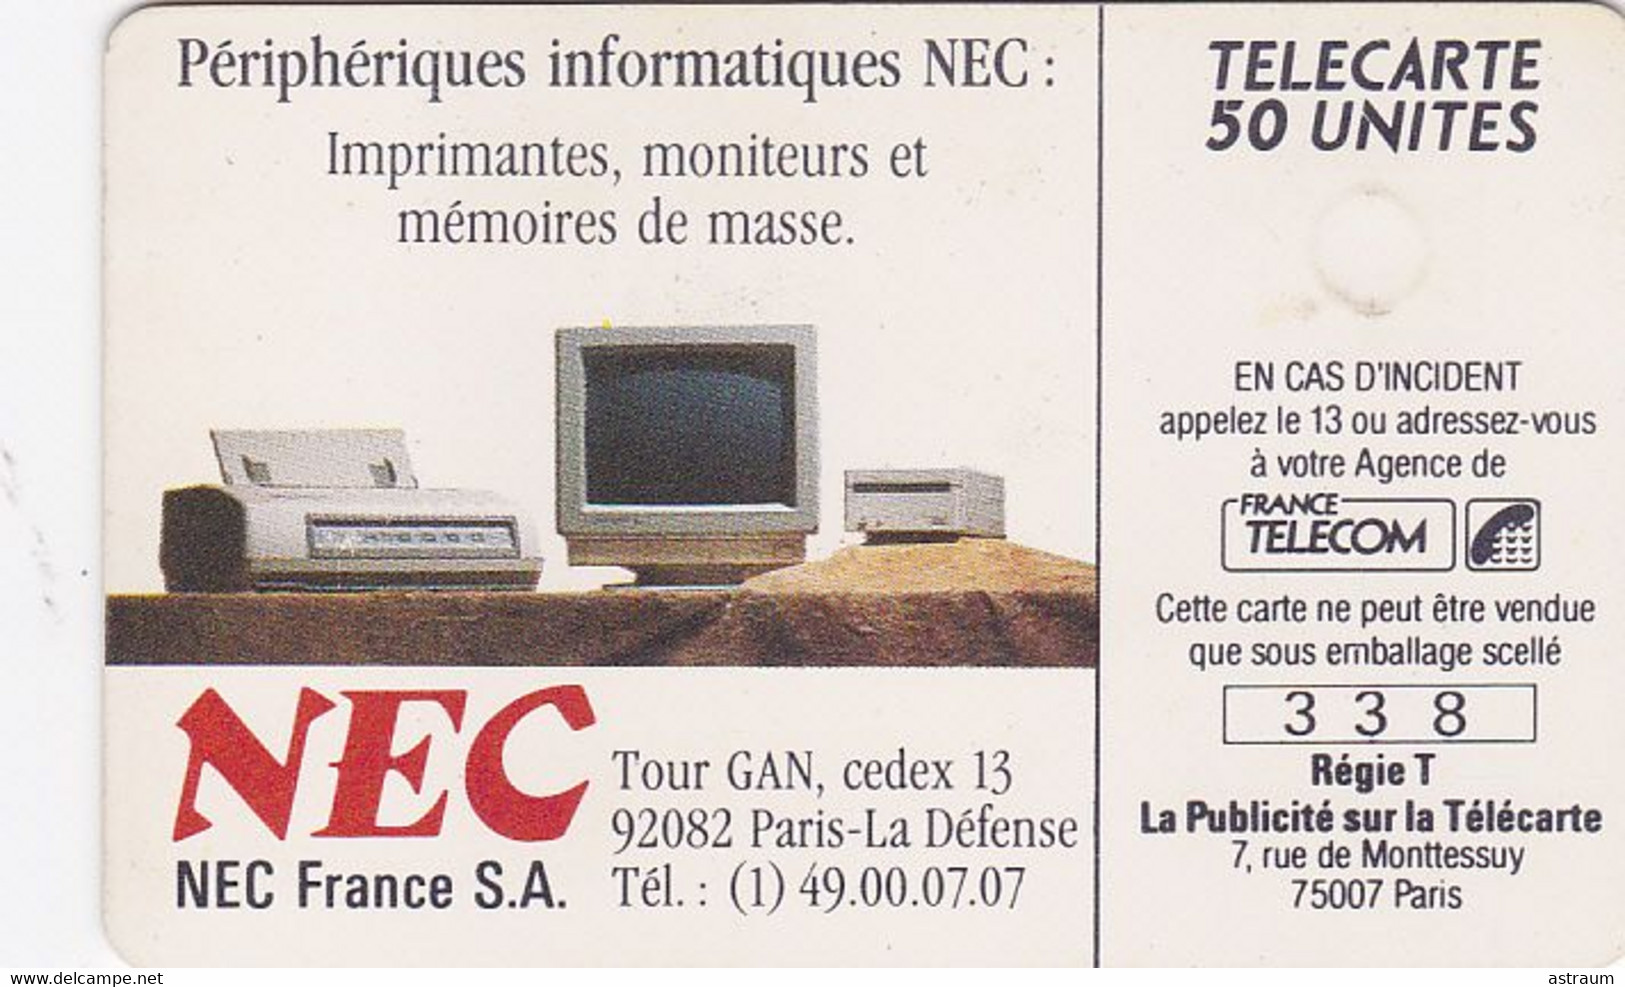 Telecarte Privée - D237 - Nec - Neuve - Gem - 2000 Ex  - 50 Un - 1990 - Privat